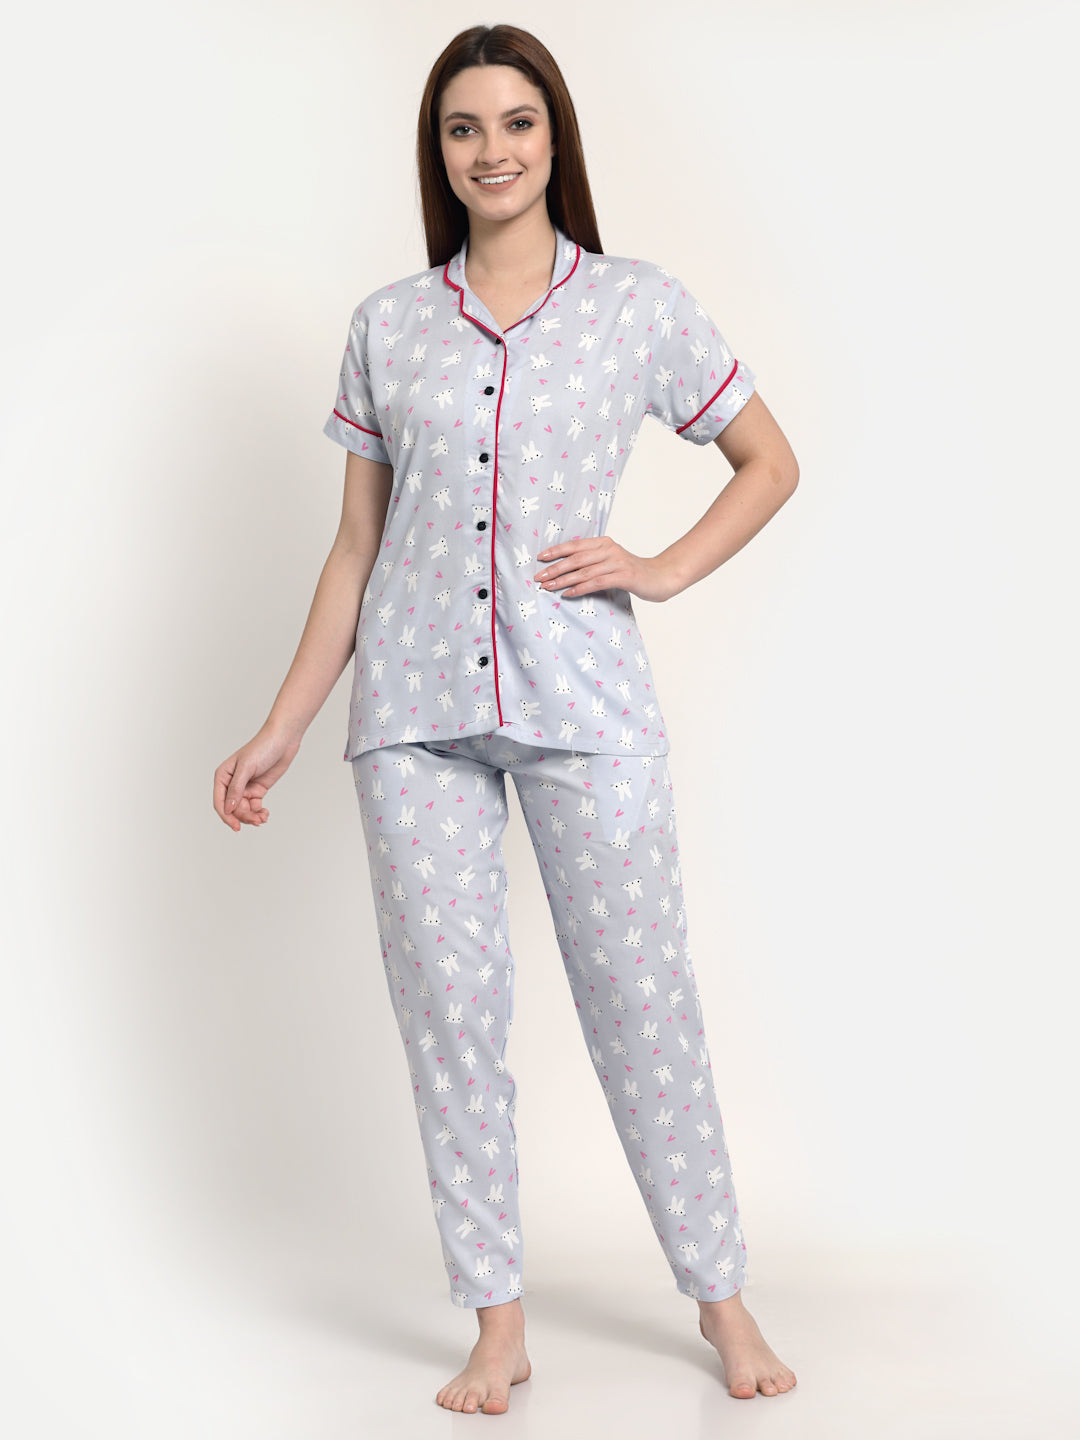 Uzarus Women's Cotton Regular Fit Printed Night Suit Set of Shirt & Pyjama